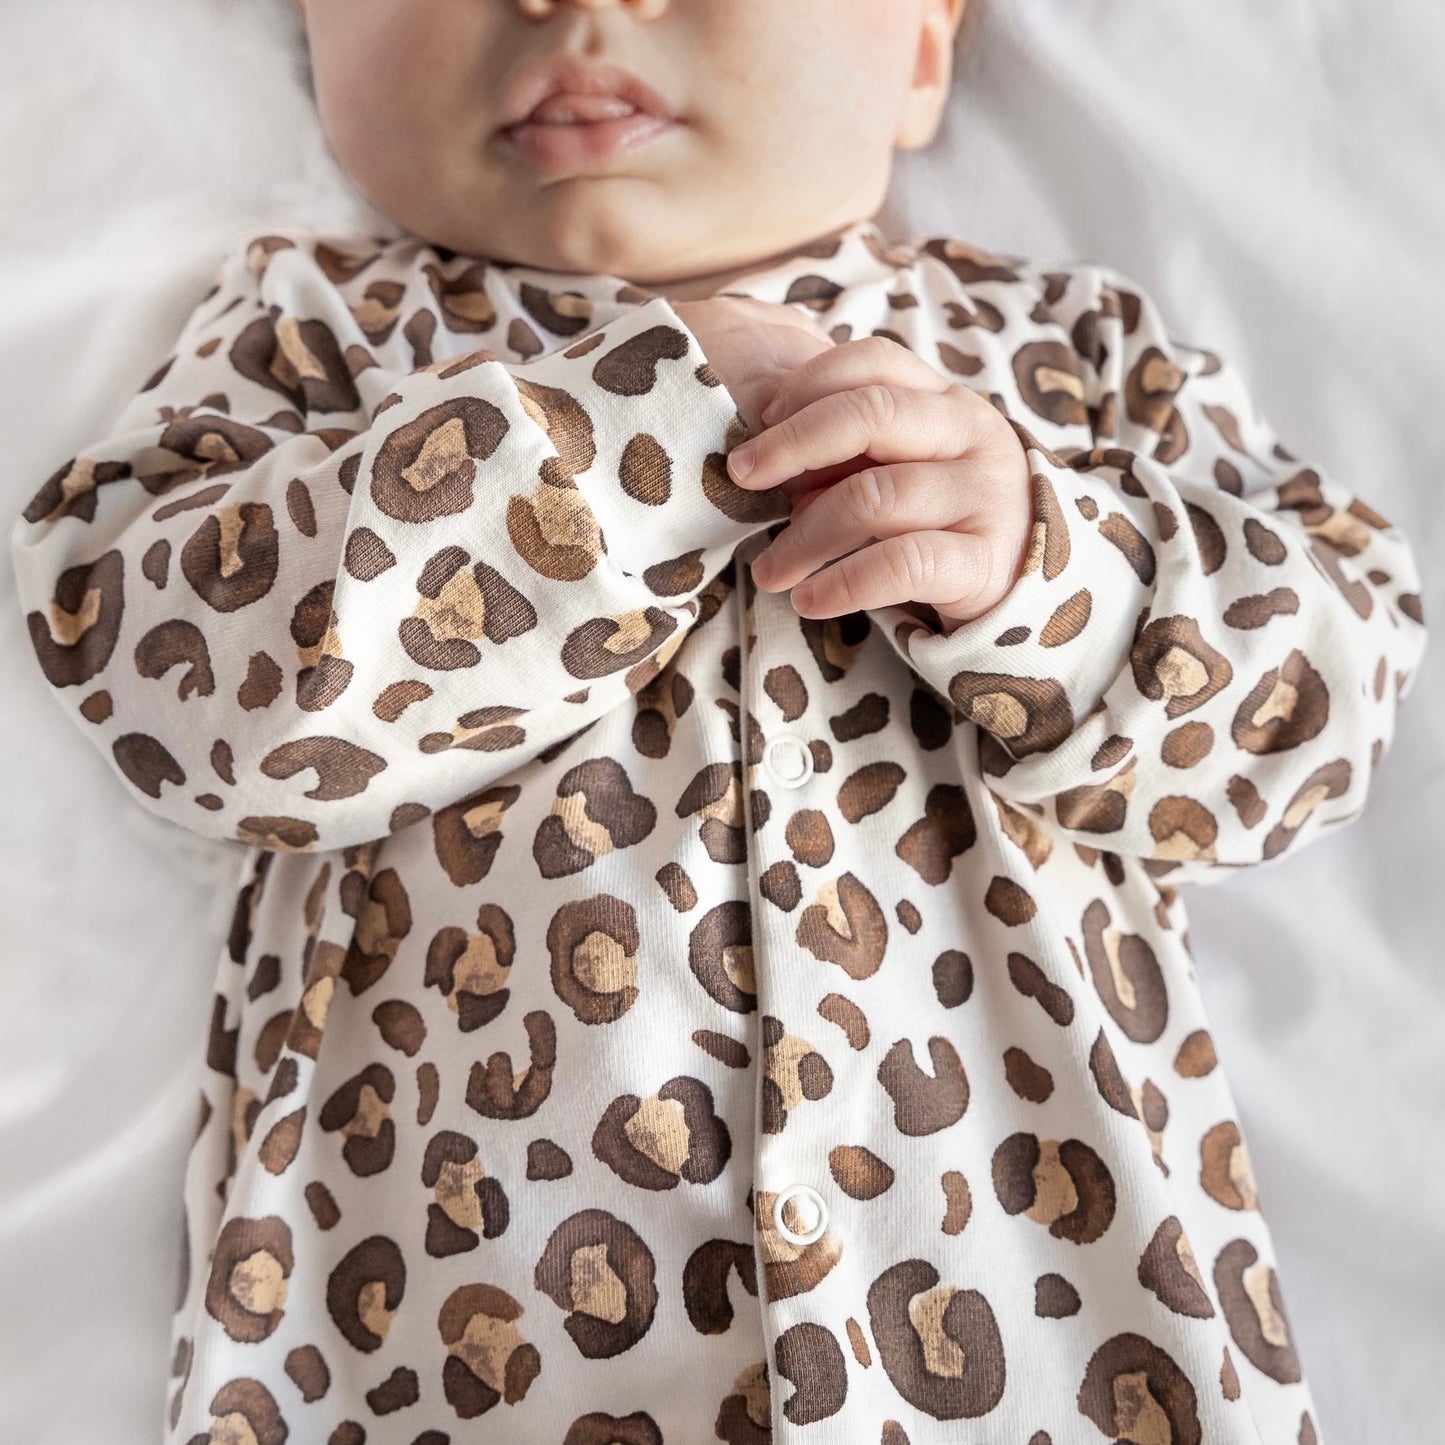 Milk Leopard Print Cotton Sleepsuit